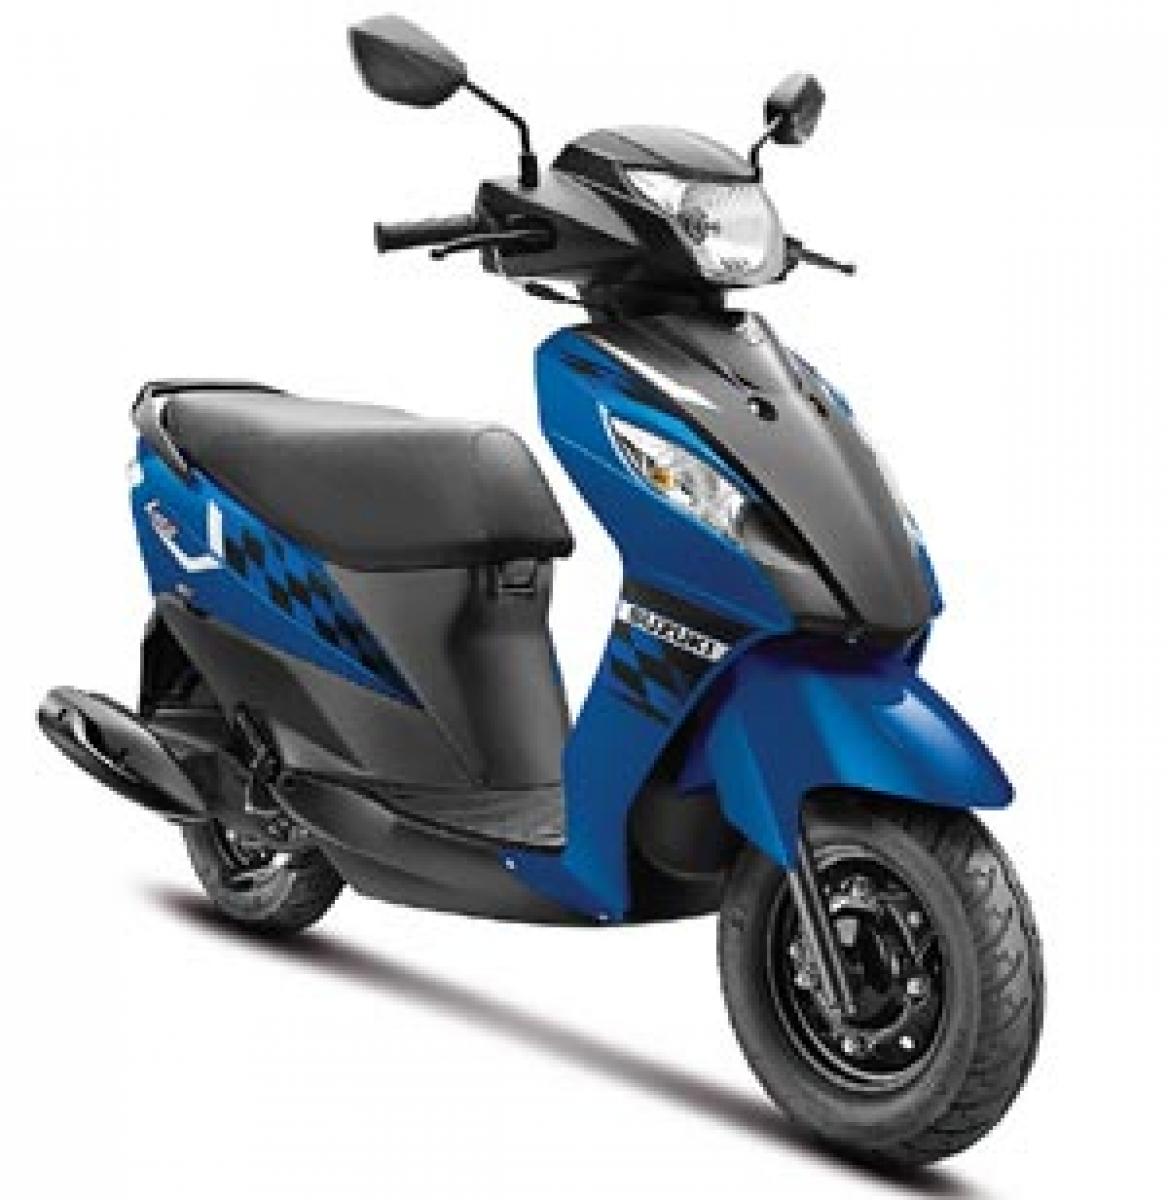 Suzuki launches updated scooter